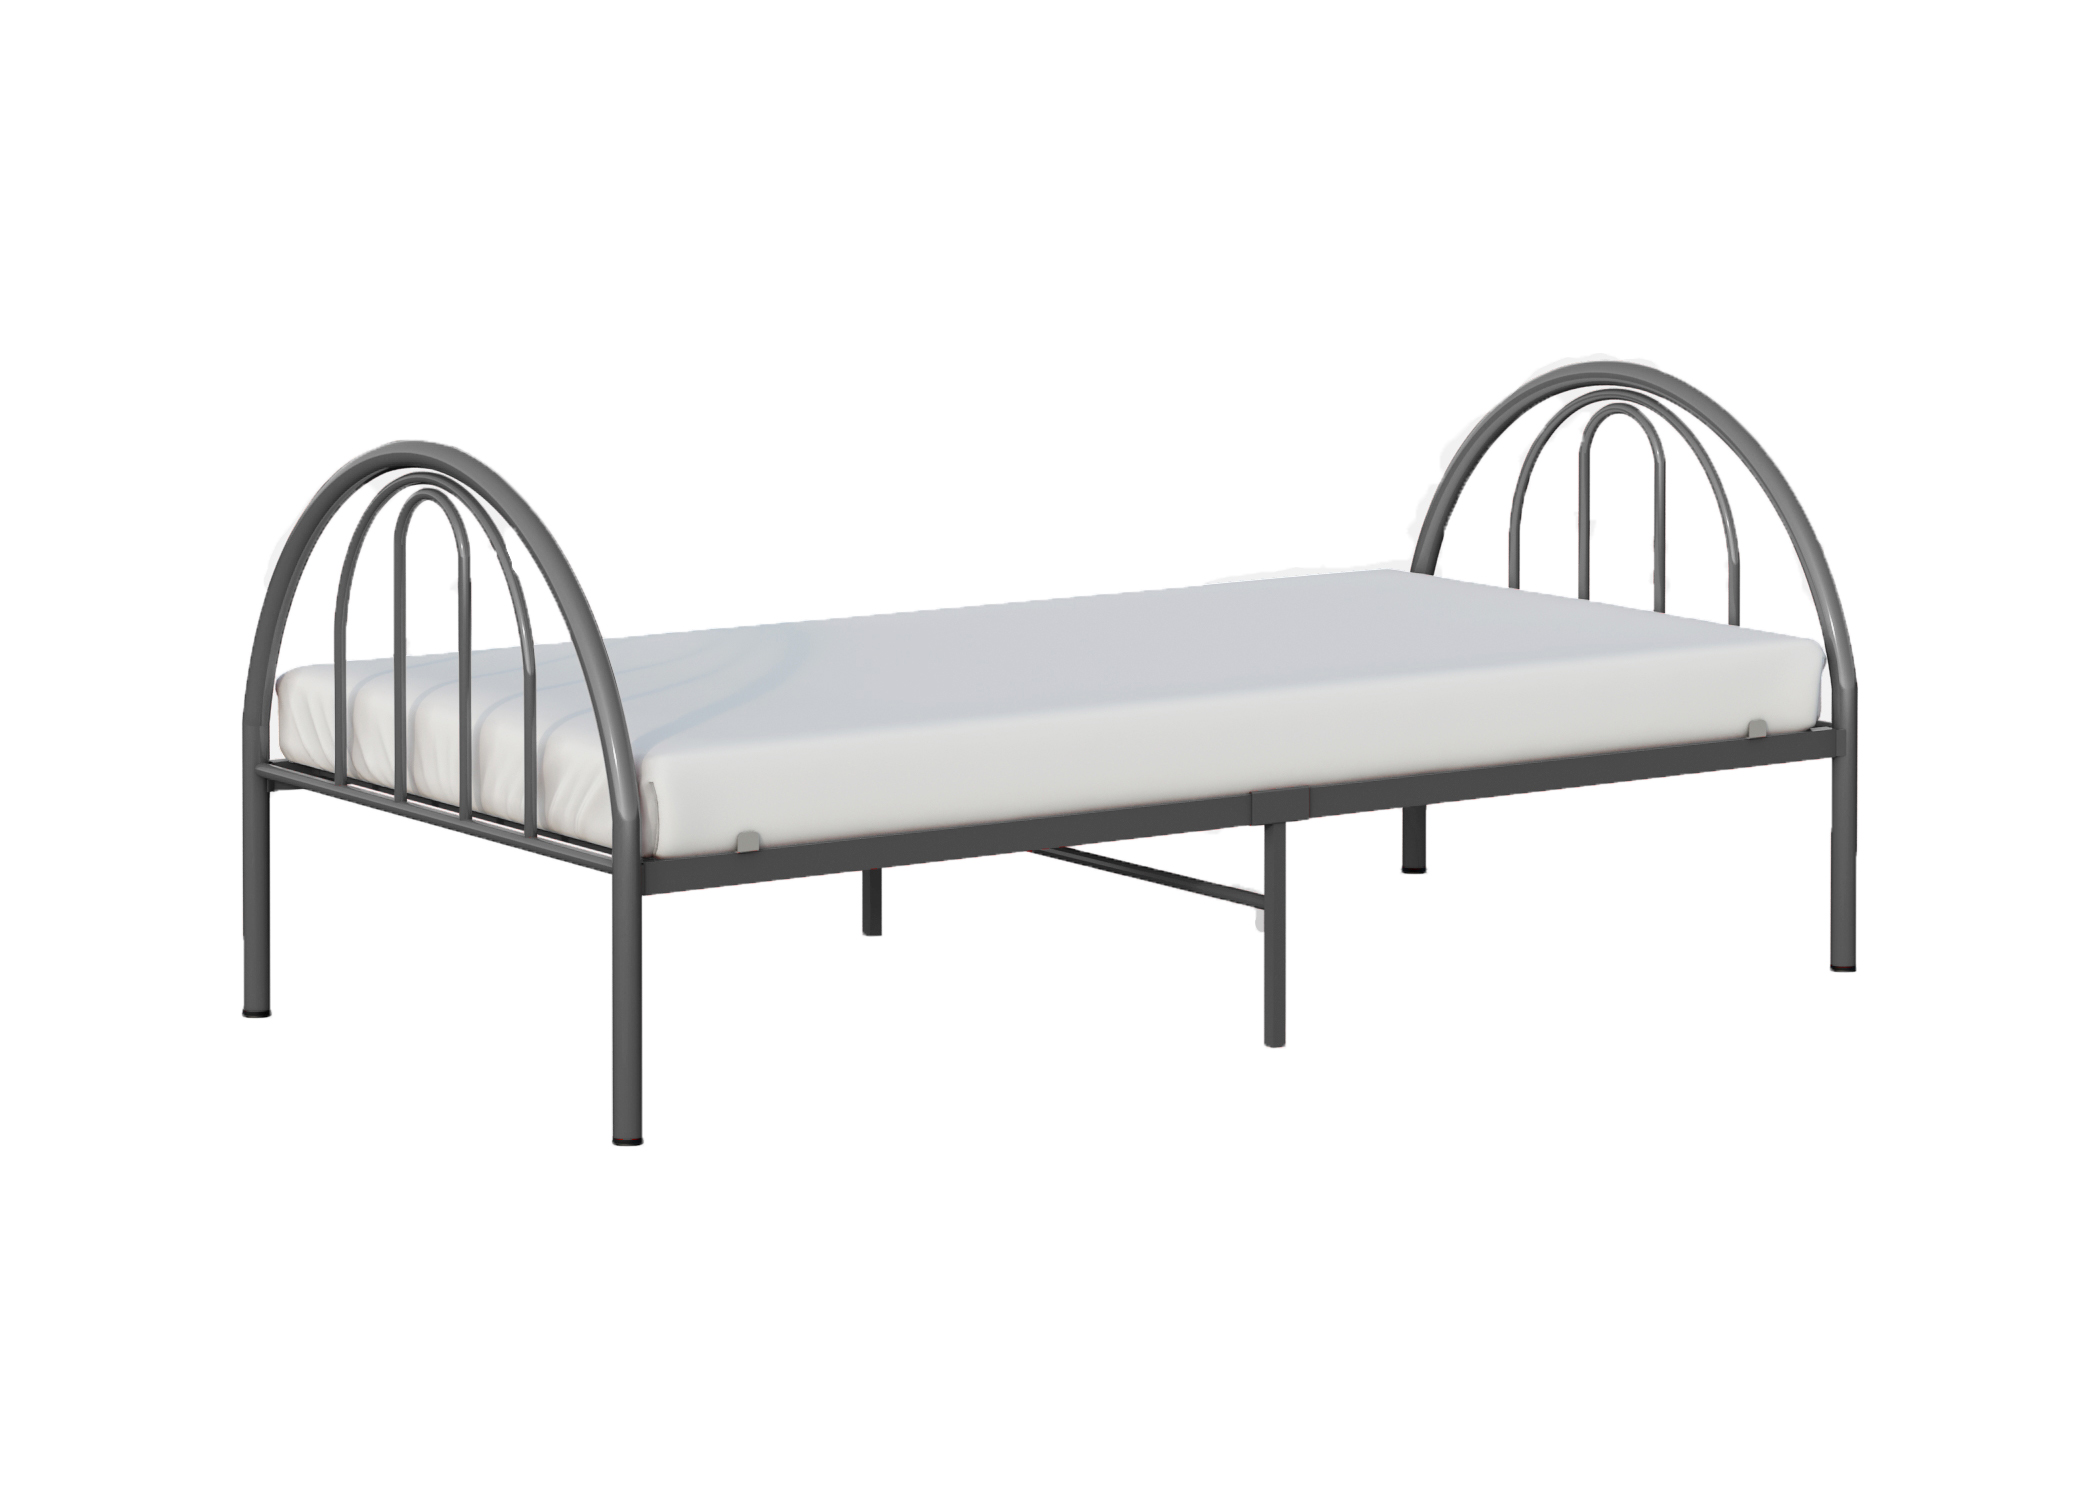 BK Furniture Brooklyn Classic Metal Bed, Twin, Gray - image 3 of 5